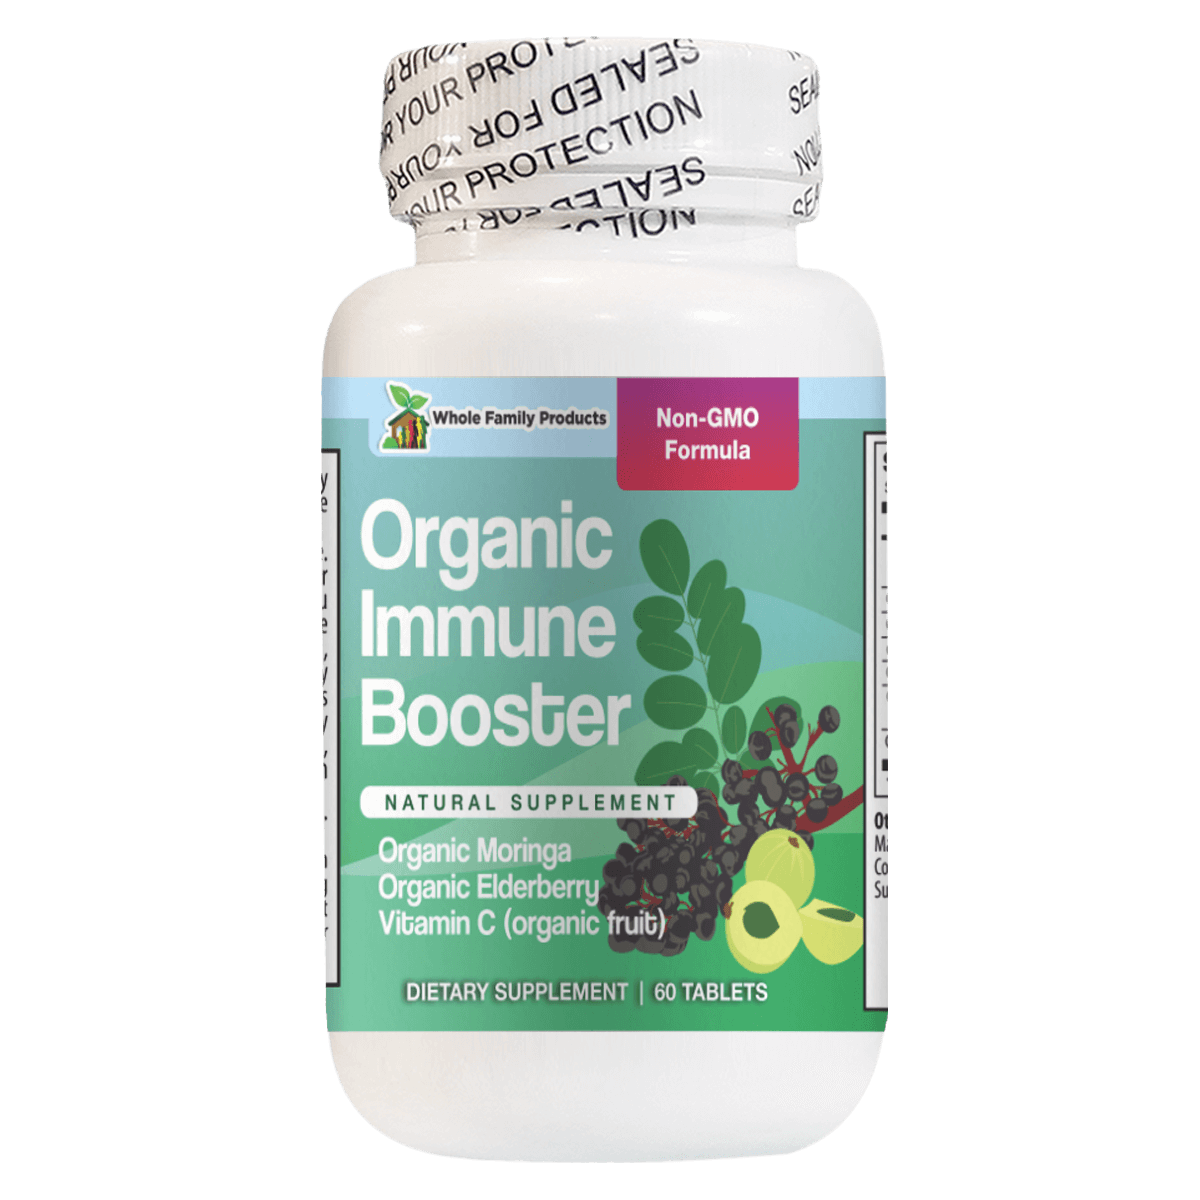 Best Organic Immune System Booster Supplement - Organic Immune Booster